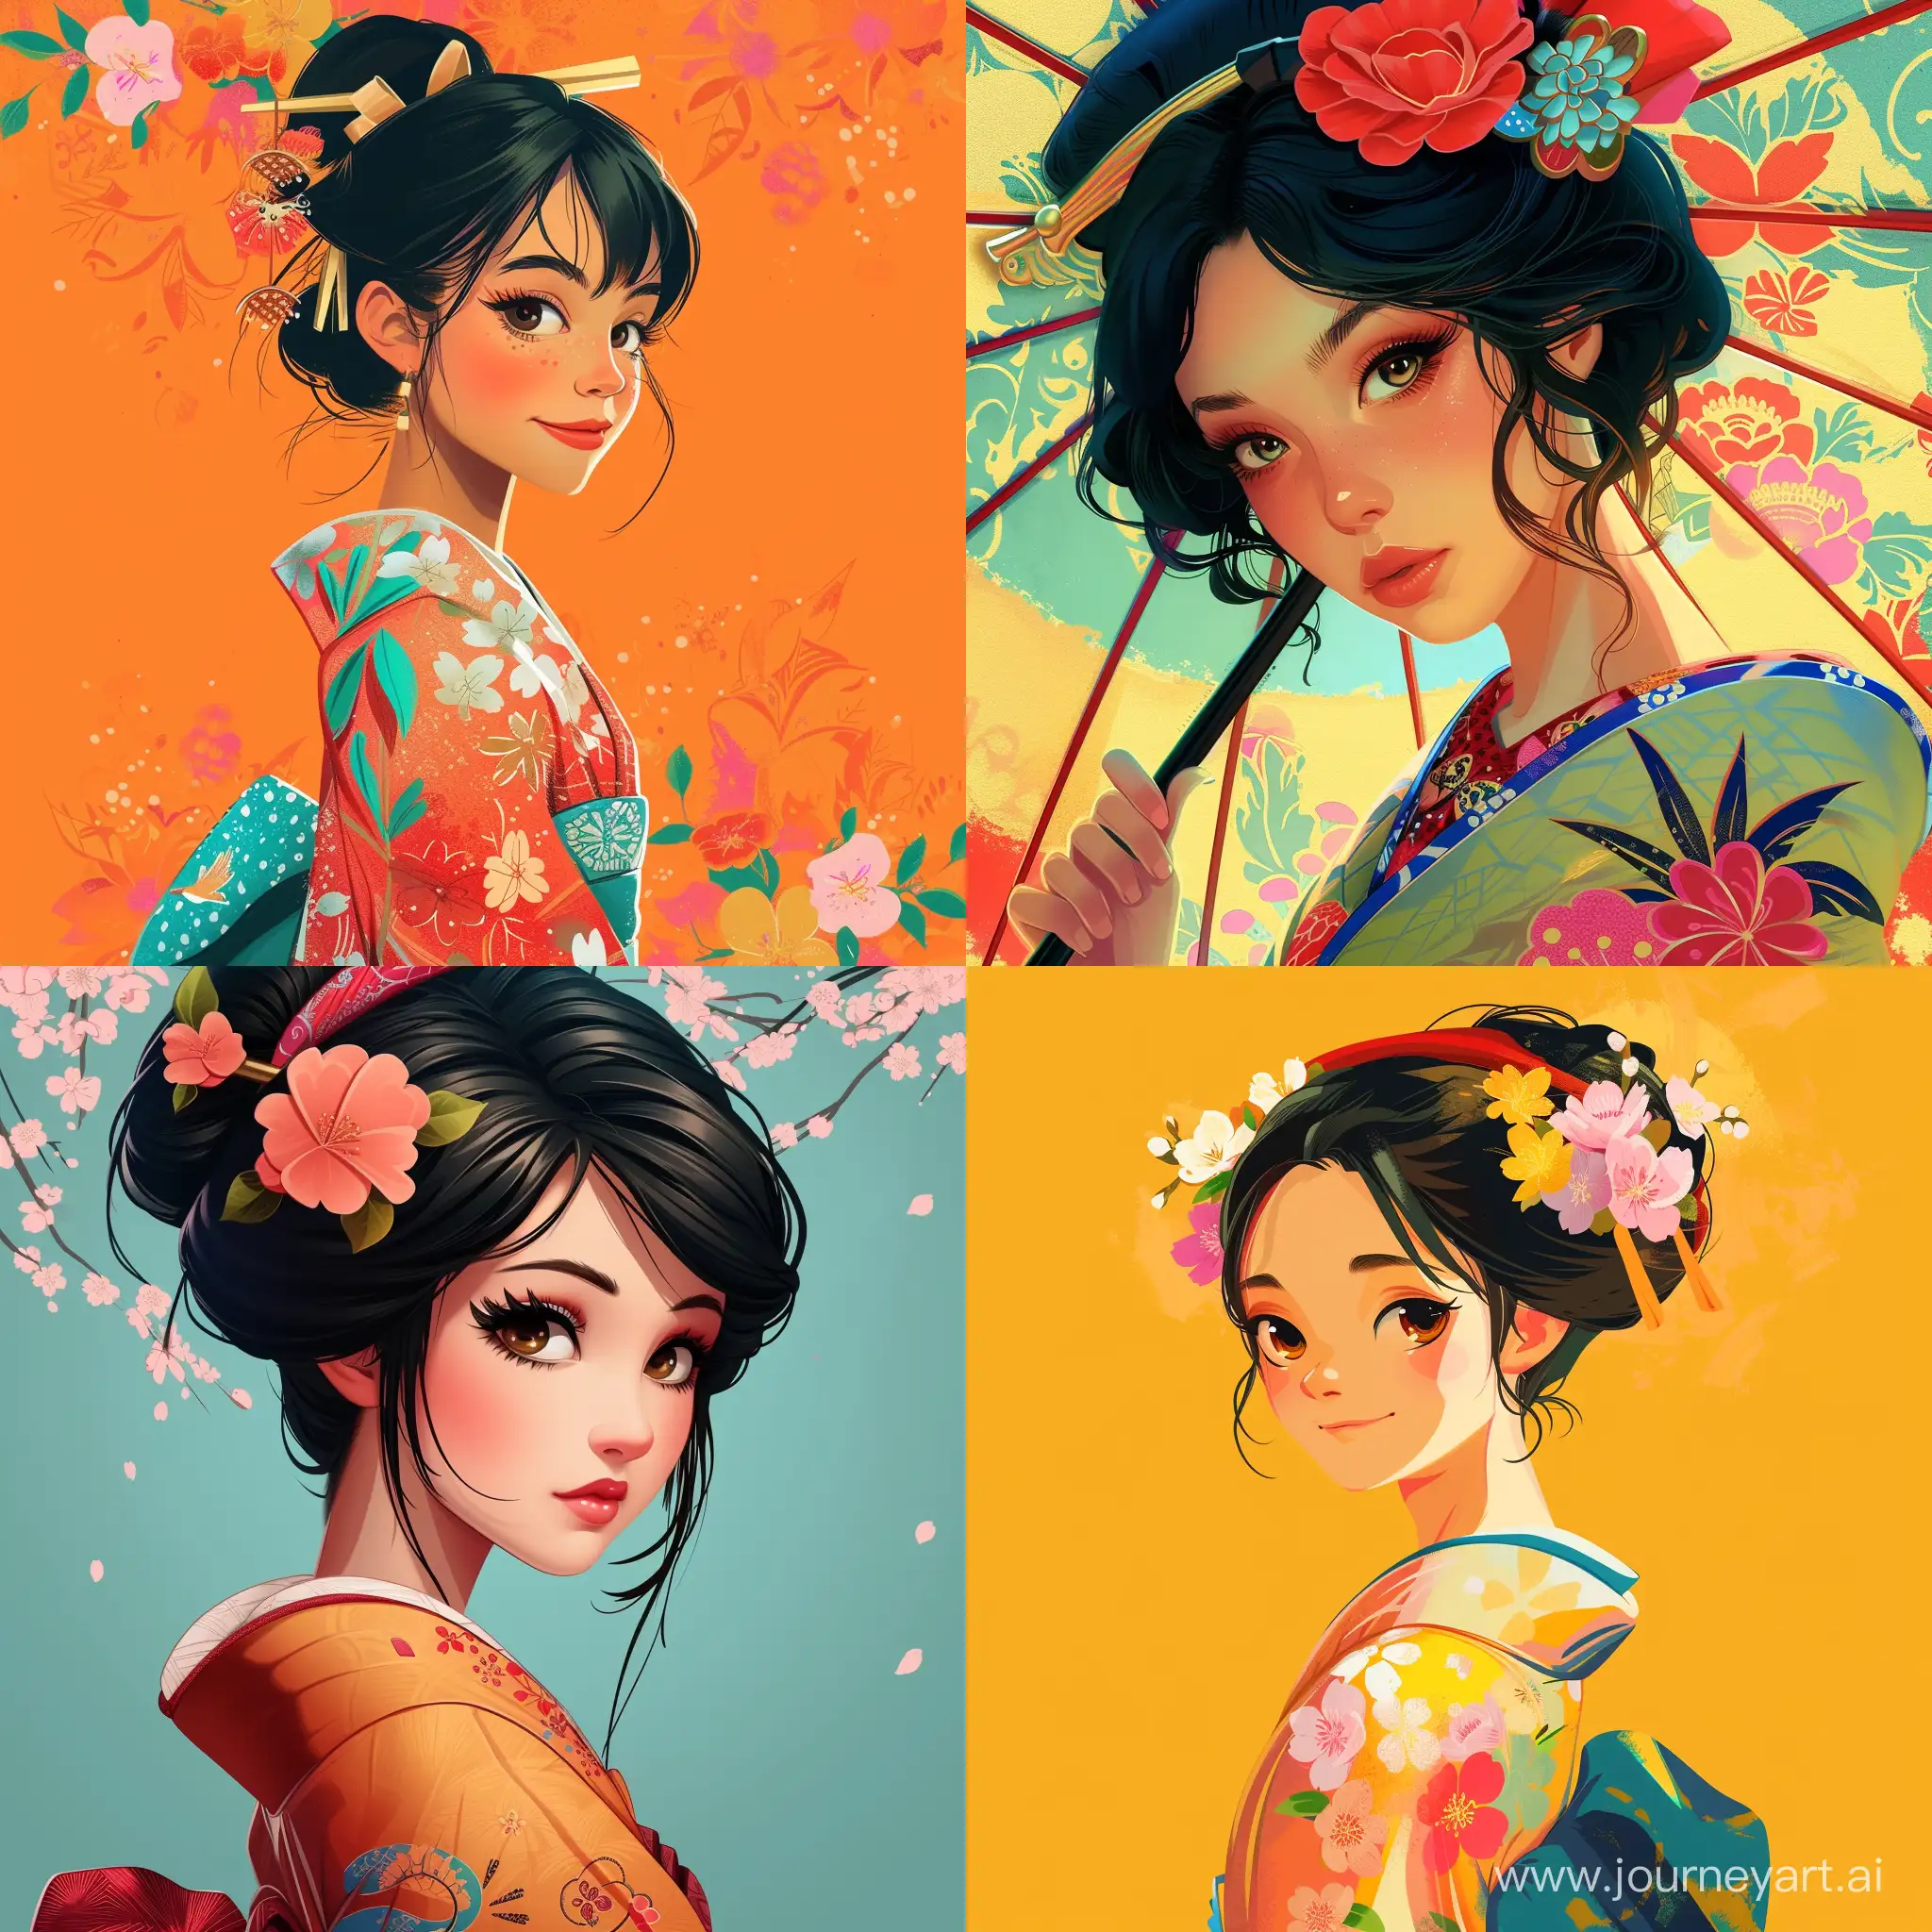 Japanese girl;disney illustration style, vibrant colours